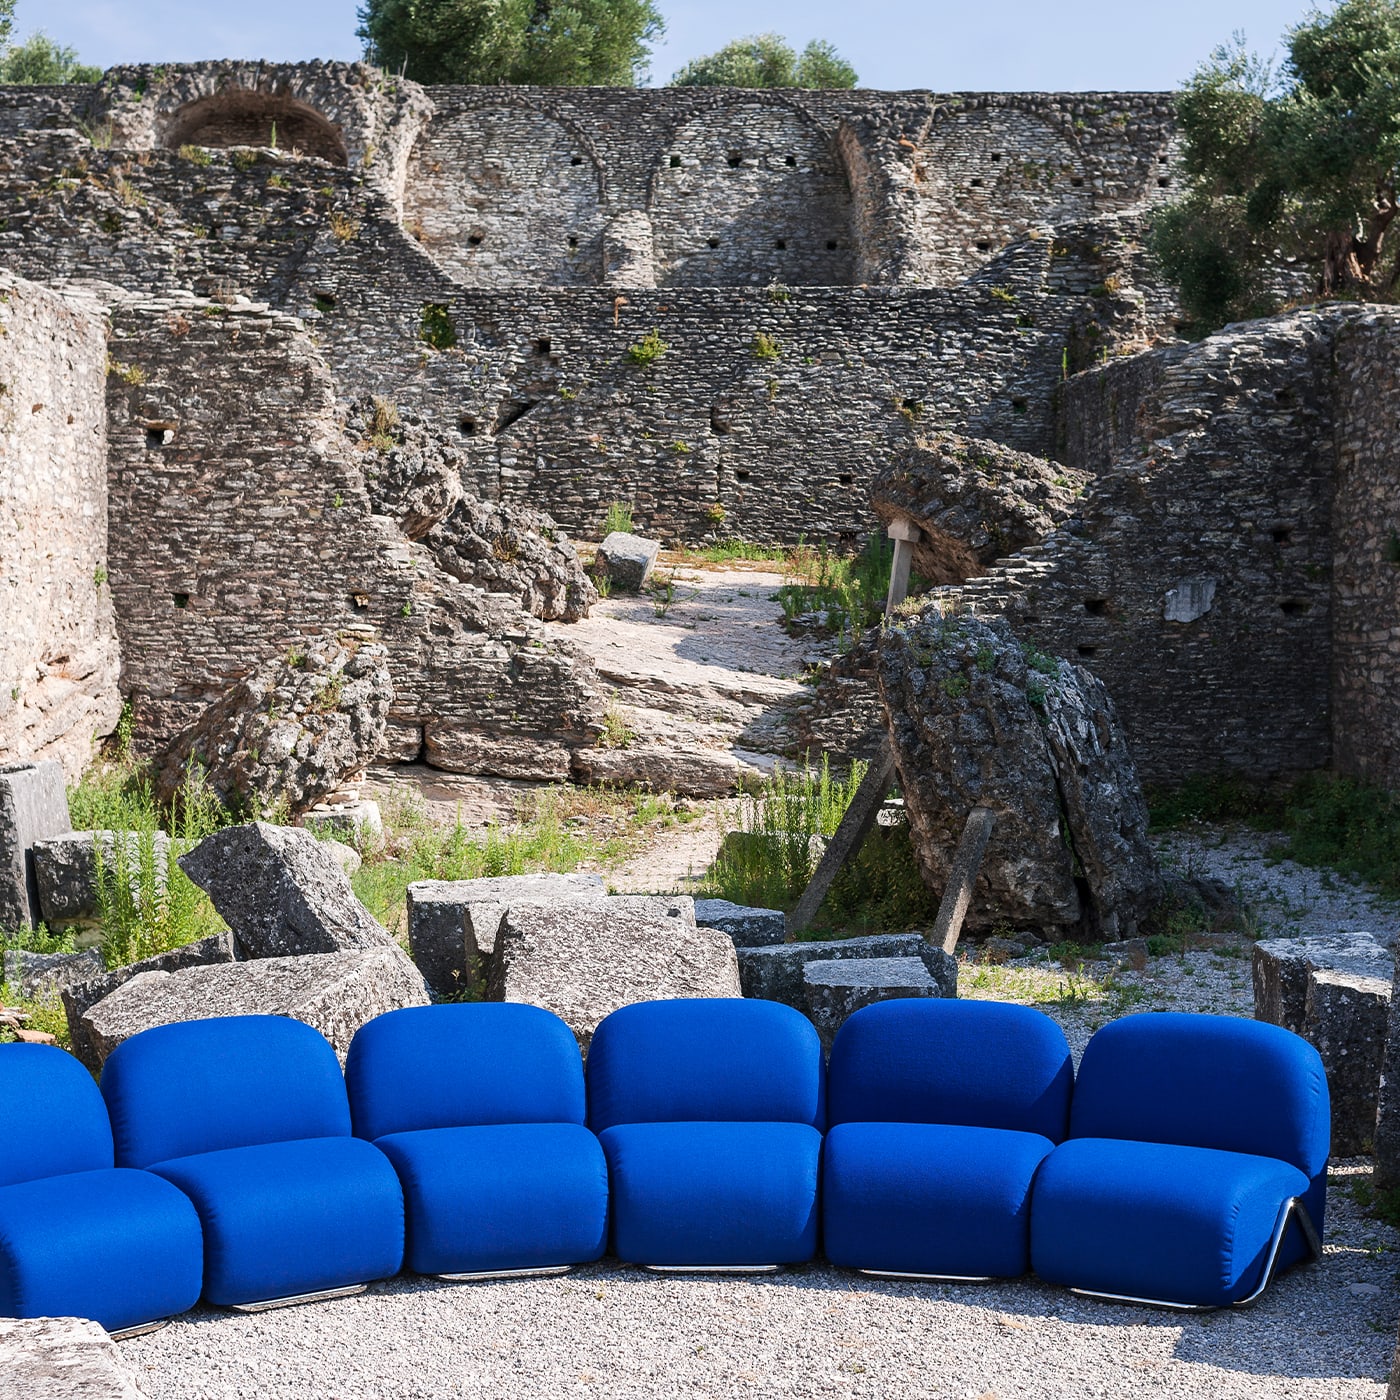 Victoria 6-Seater Modular Blue Sofa by David/Nicolas - Tacchini